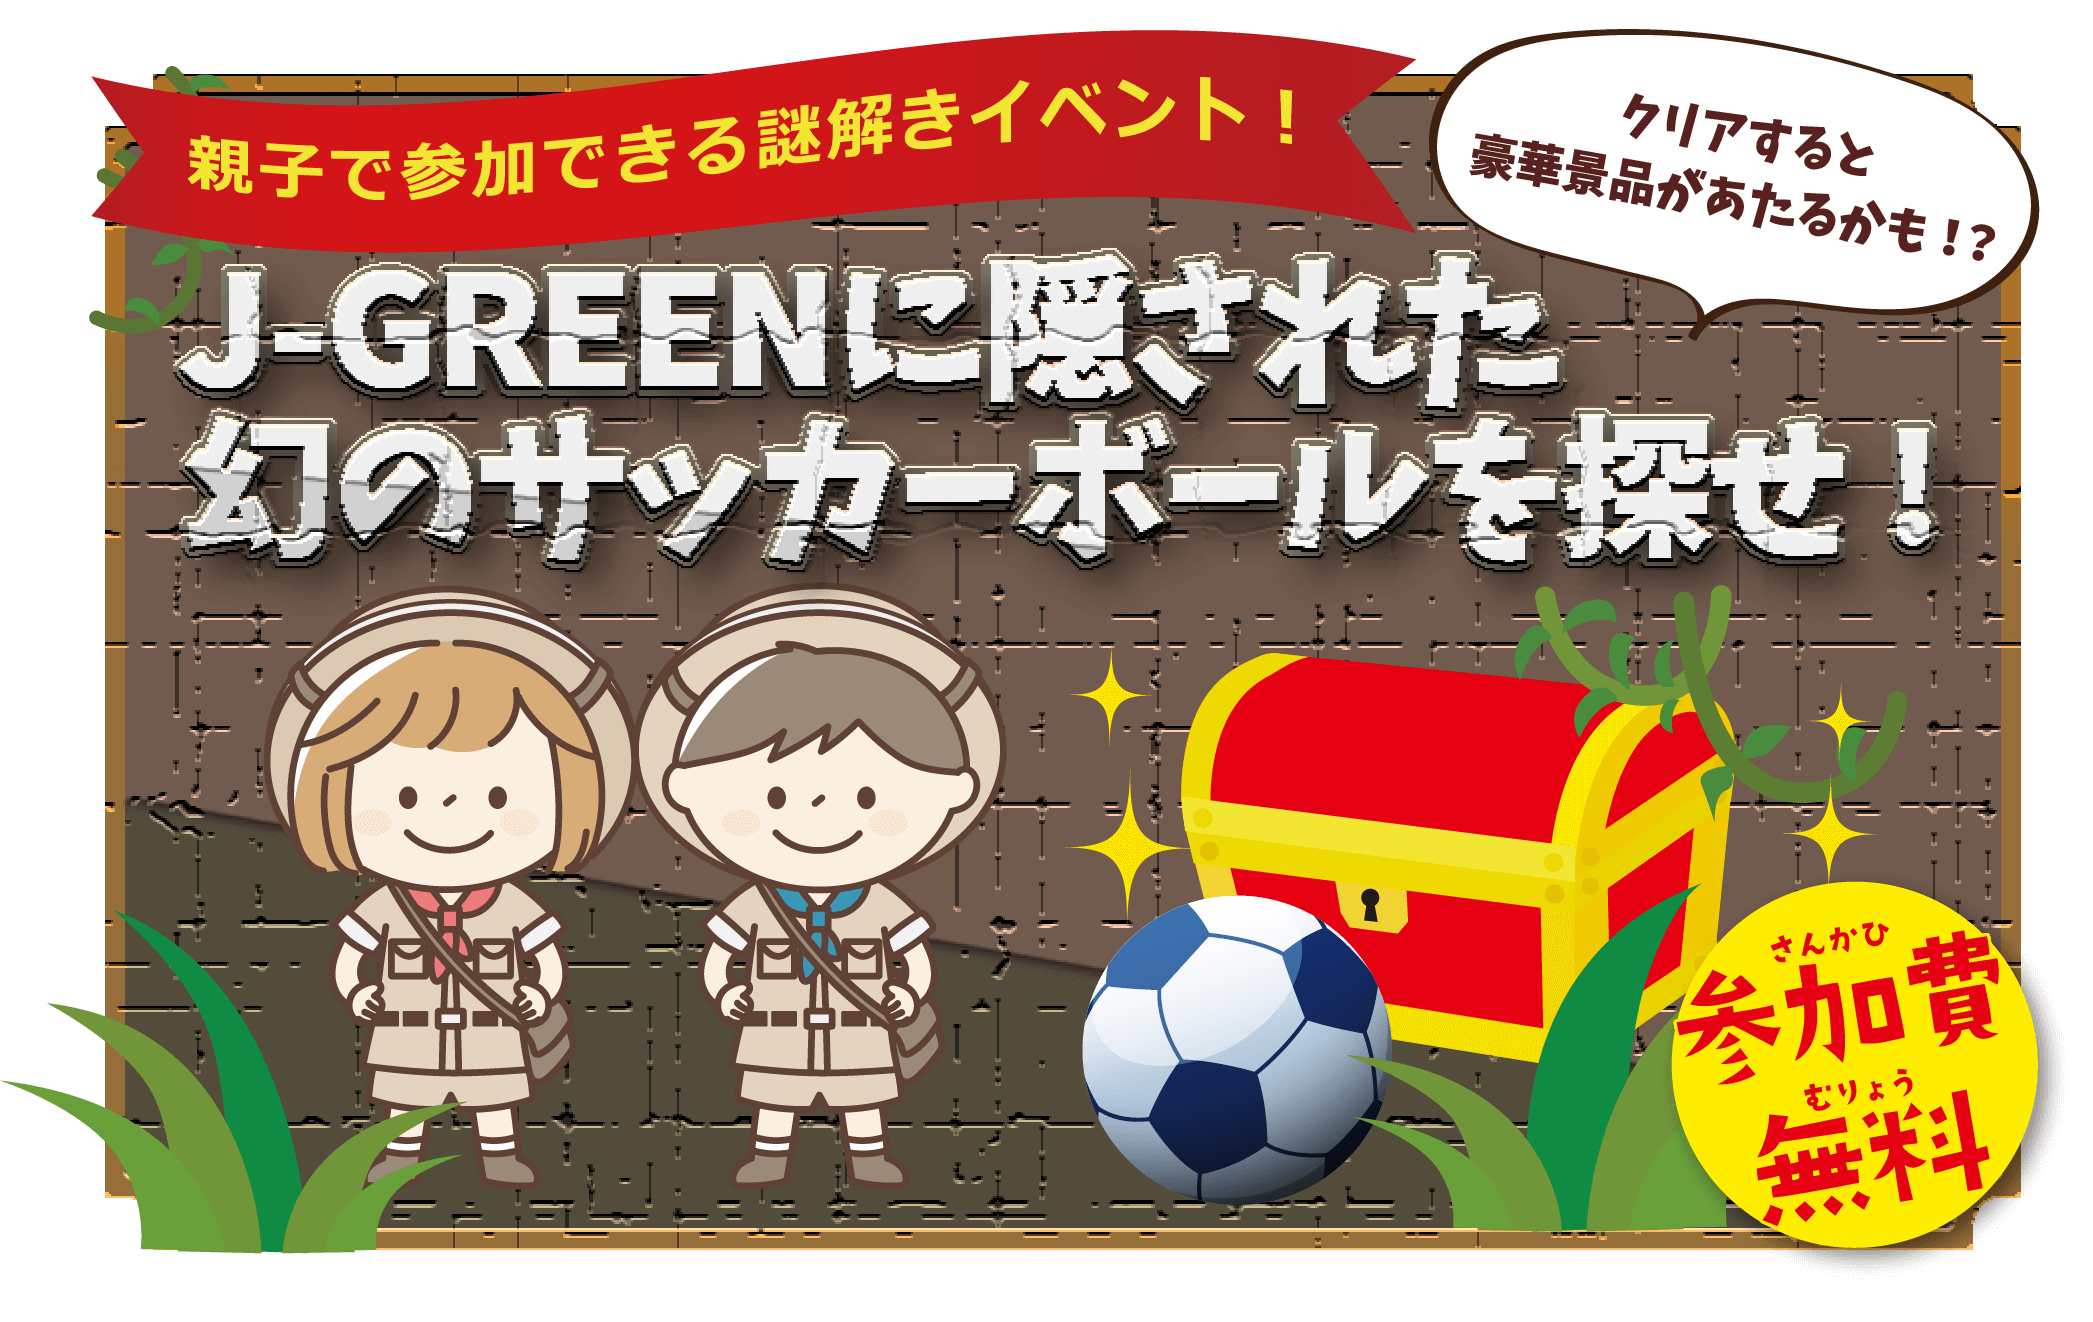 J-Greenに隠された幻のサッカーボールを探せ!